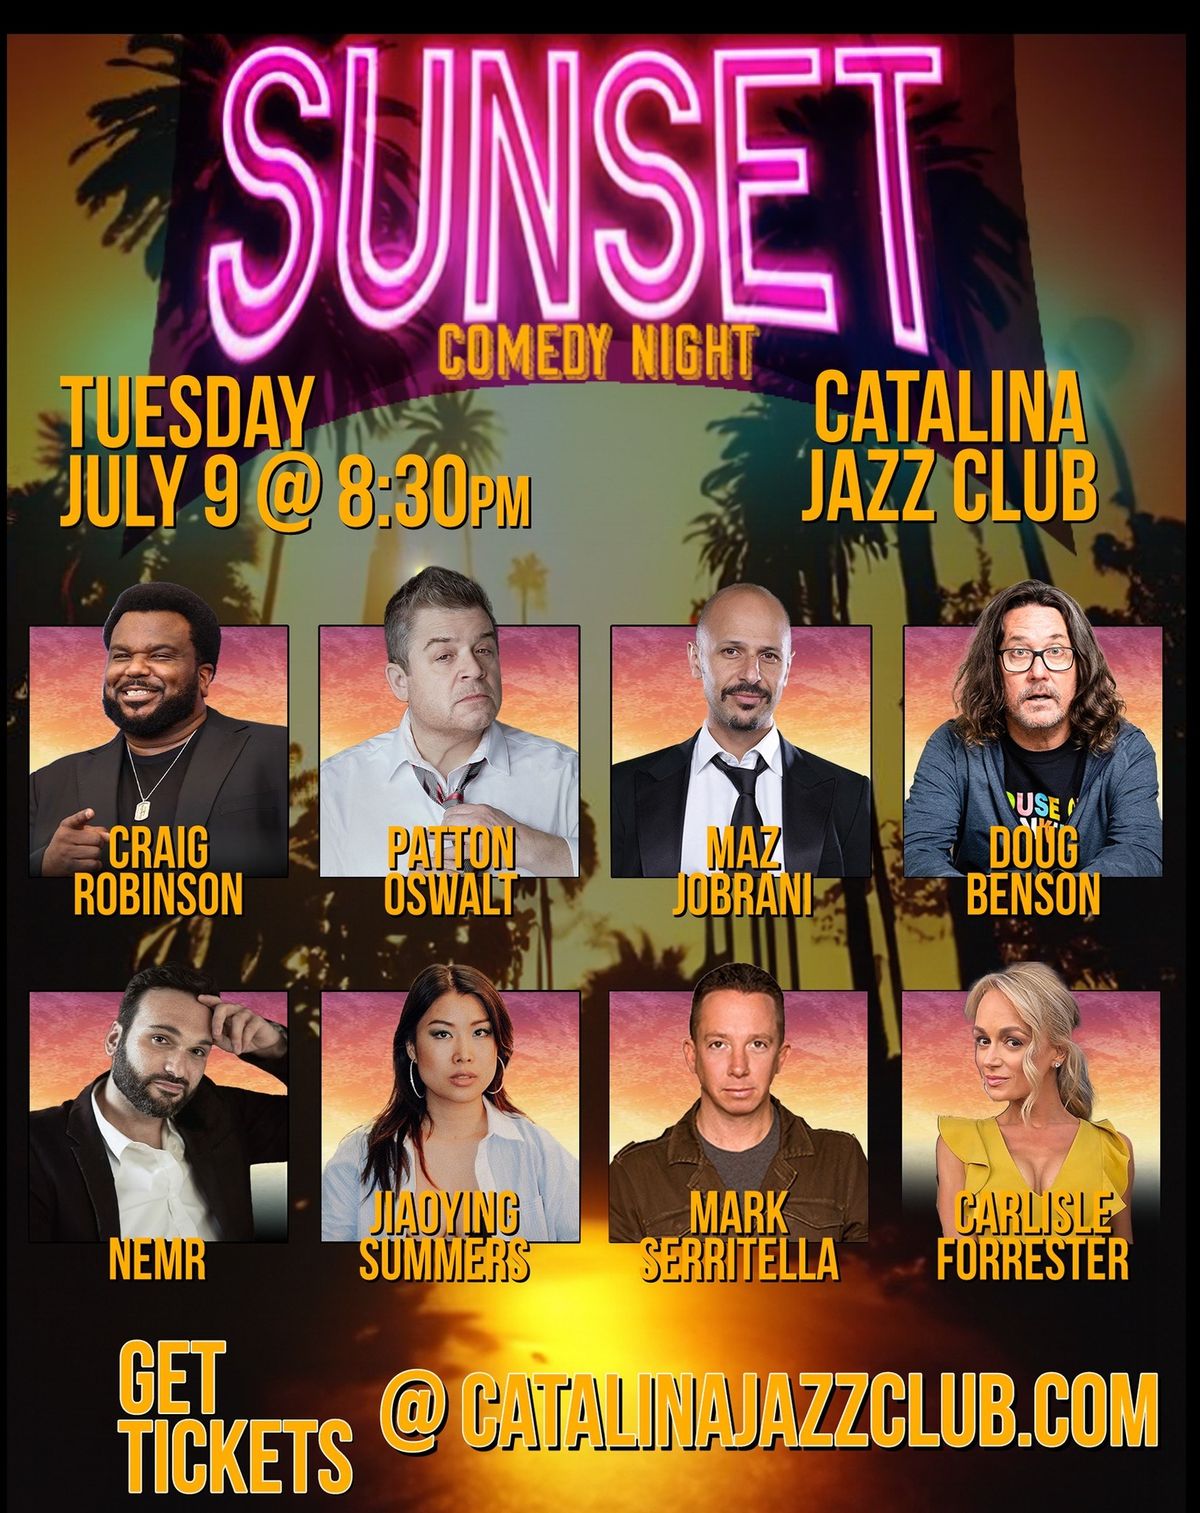 SUNSET COMEDY NIGHT | starring CRAIG ROBINSON, PATTON OSWALT, MAZ JOBRANI, DOUG BENSON and more!